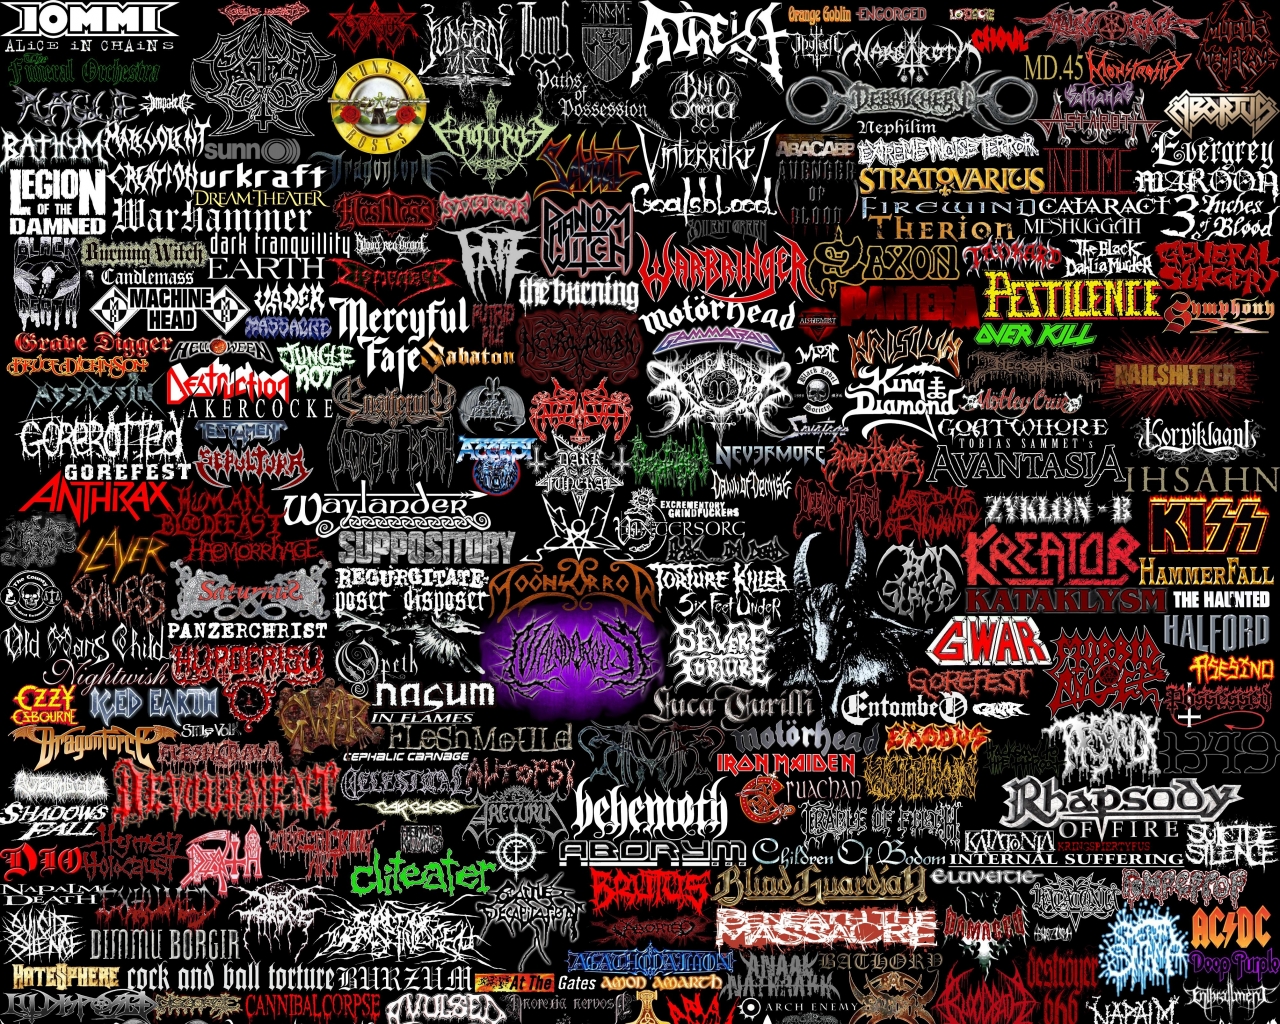 Band Metal Music HDwallpaper Wallpaper Entertainment